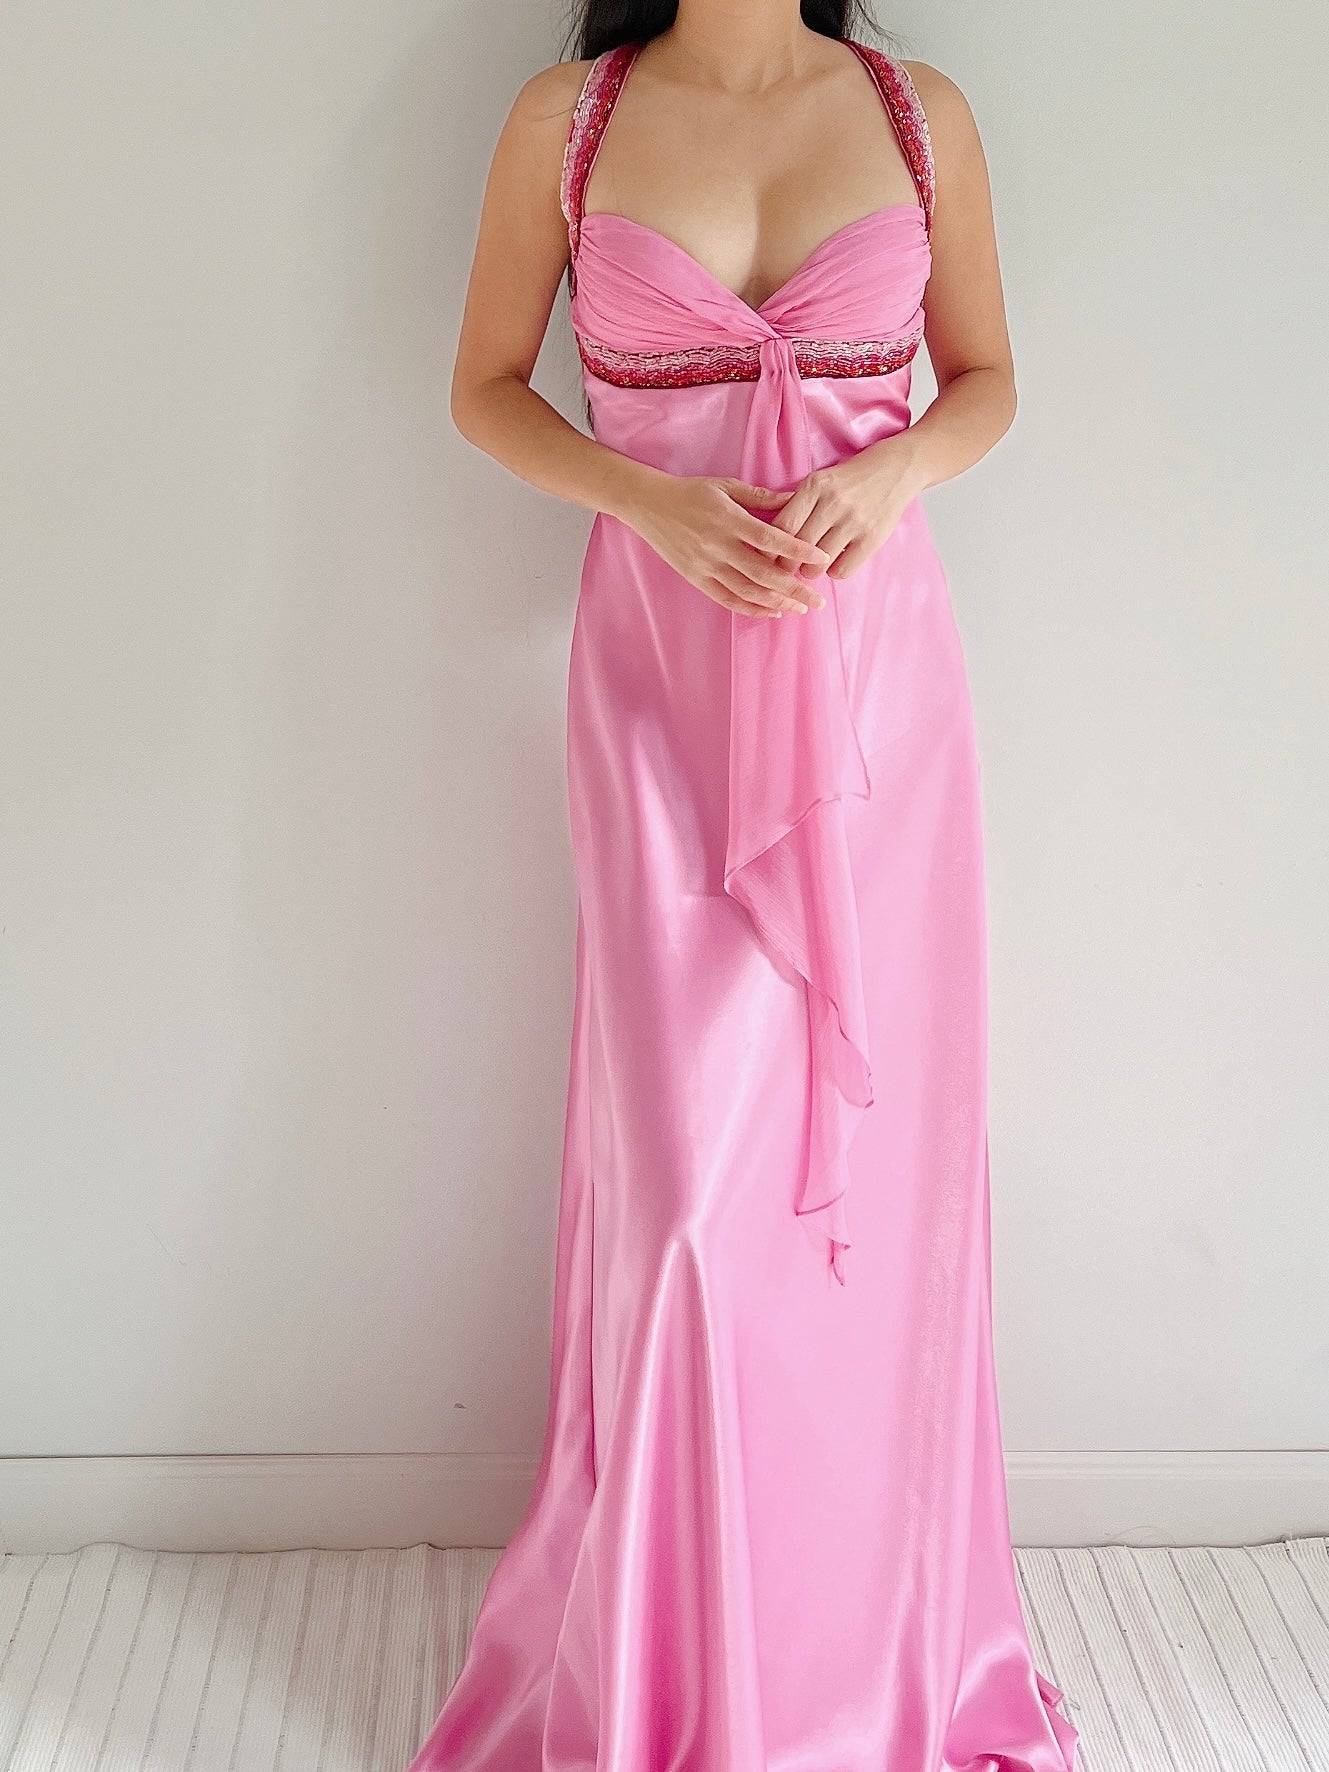 Y2K Hot Pink Satin Gown - M